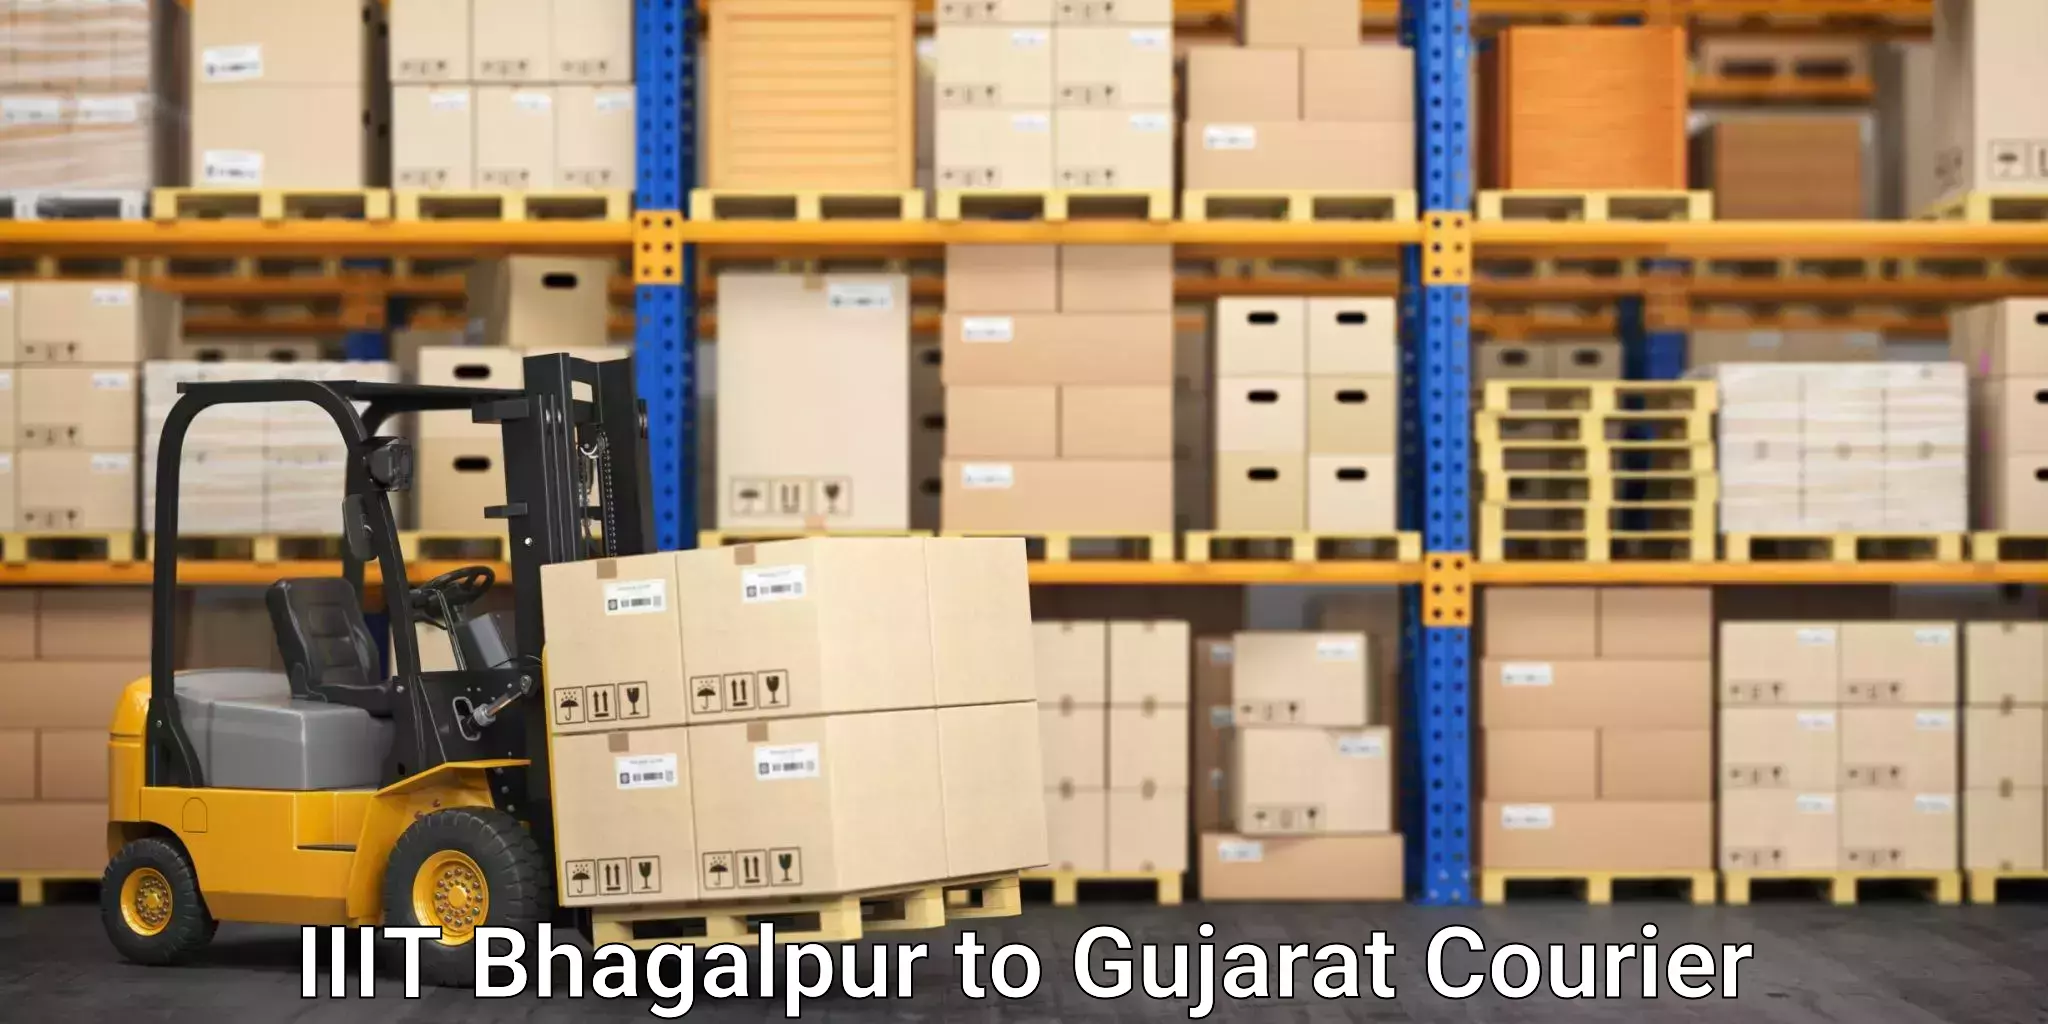 Moving and storage services IIIT Bhagalpur to Gujarat